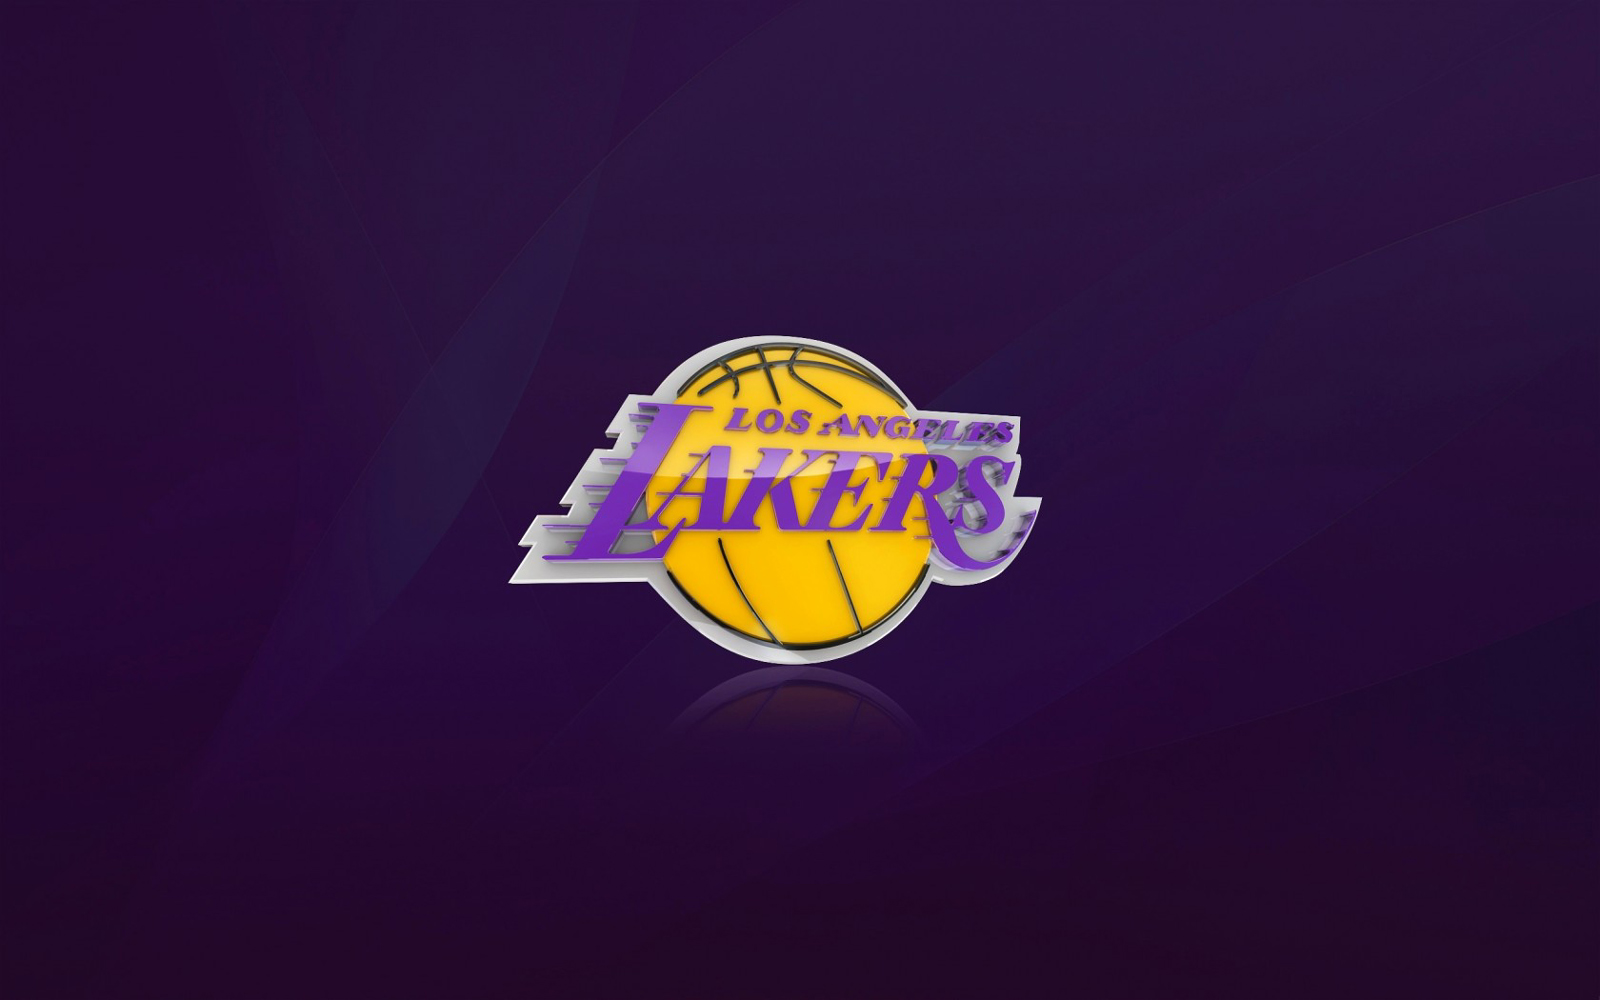 Los Angeles Lakers 2013 Logo NBA USA Hd Desktop Wallpaper